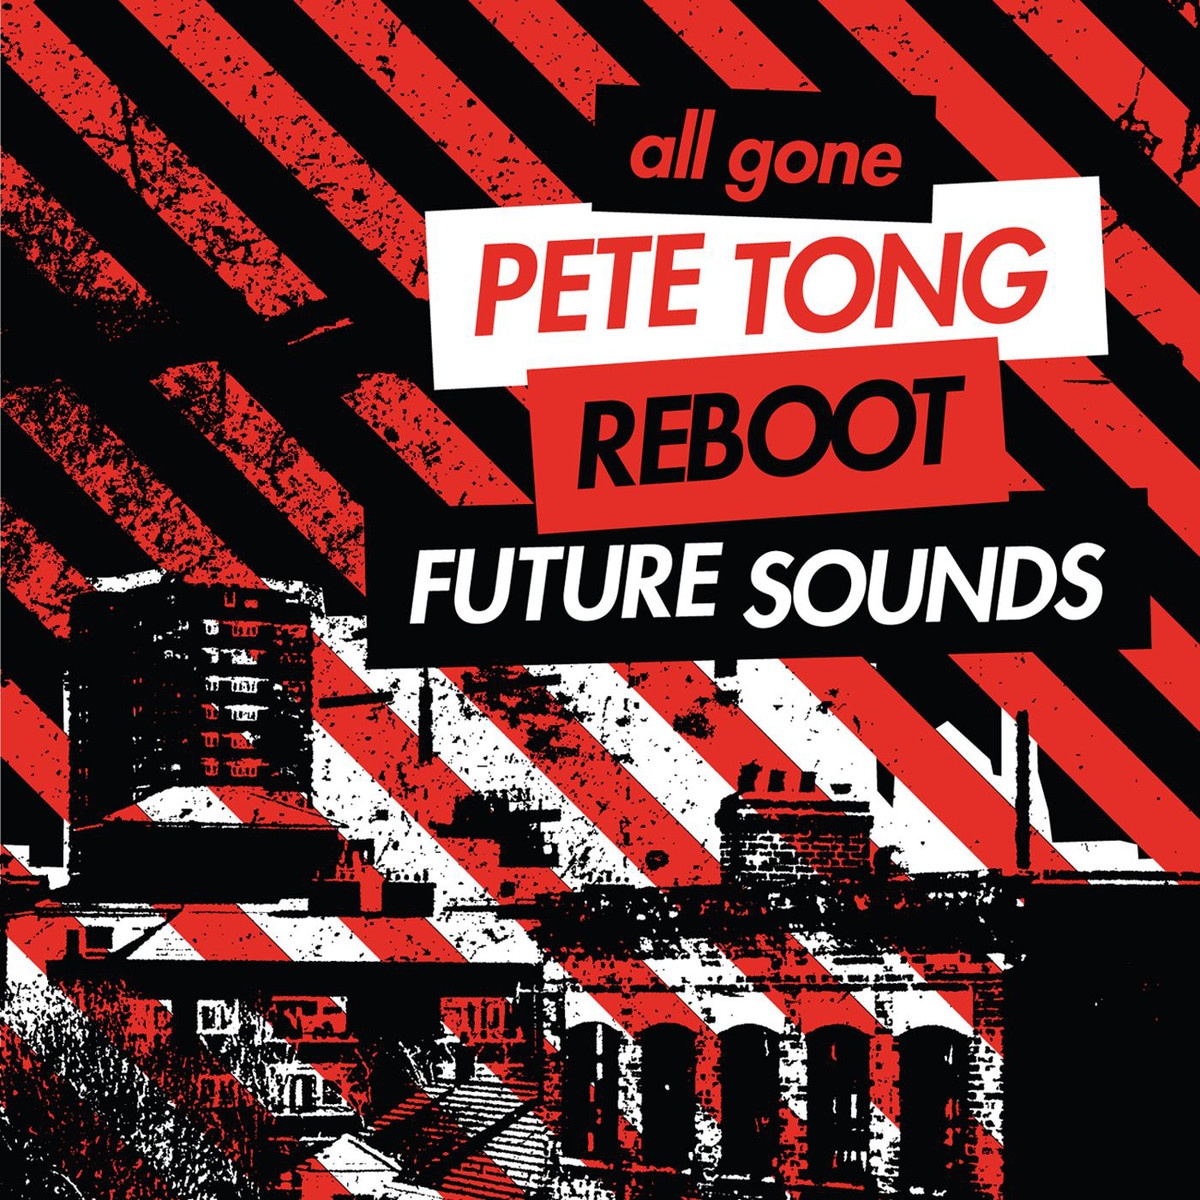 All Gone Pete Tong & Reboot Future Sounds (Pete Tong Bonus Mix)